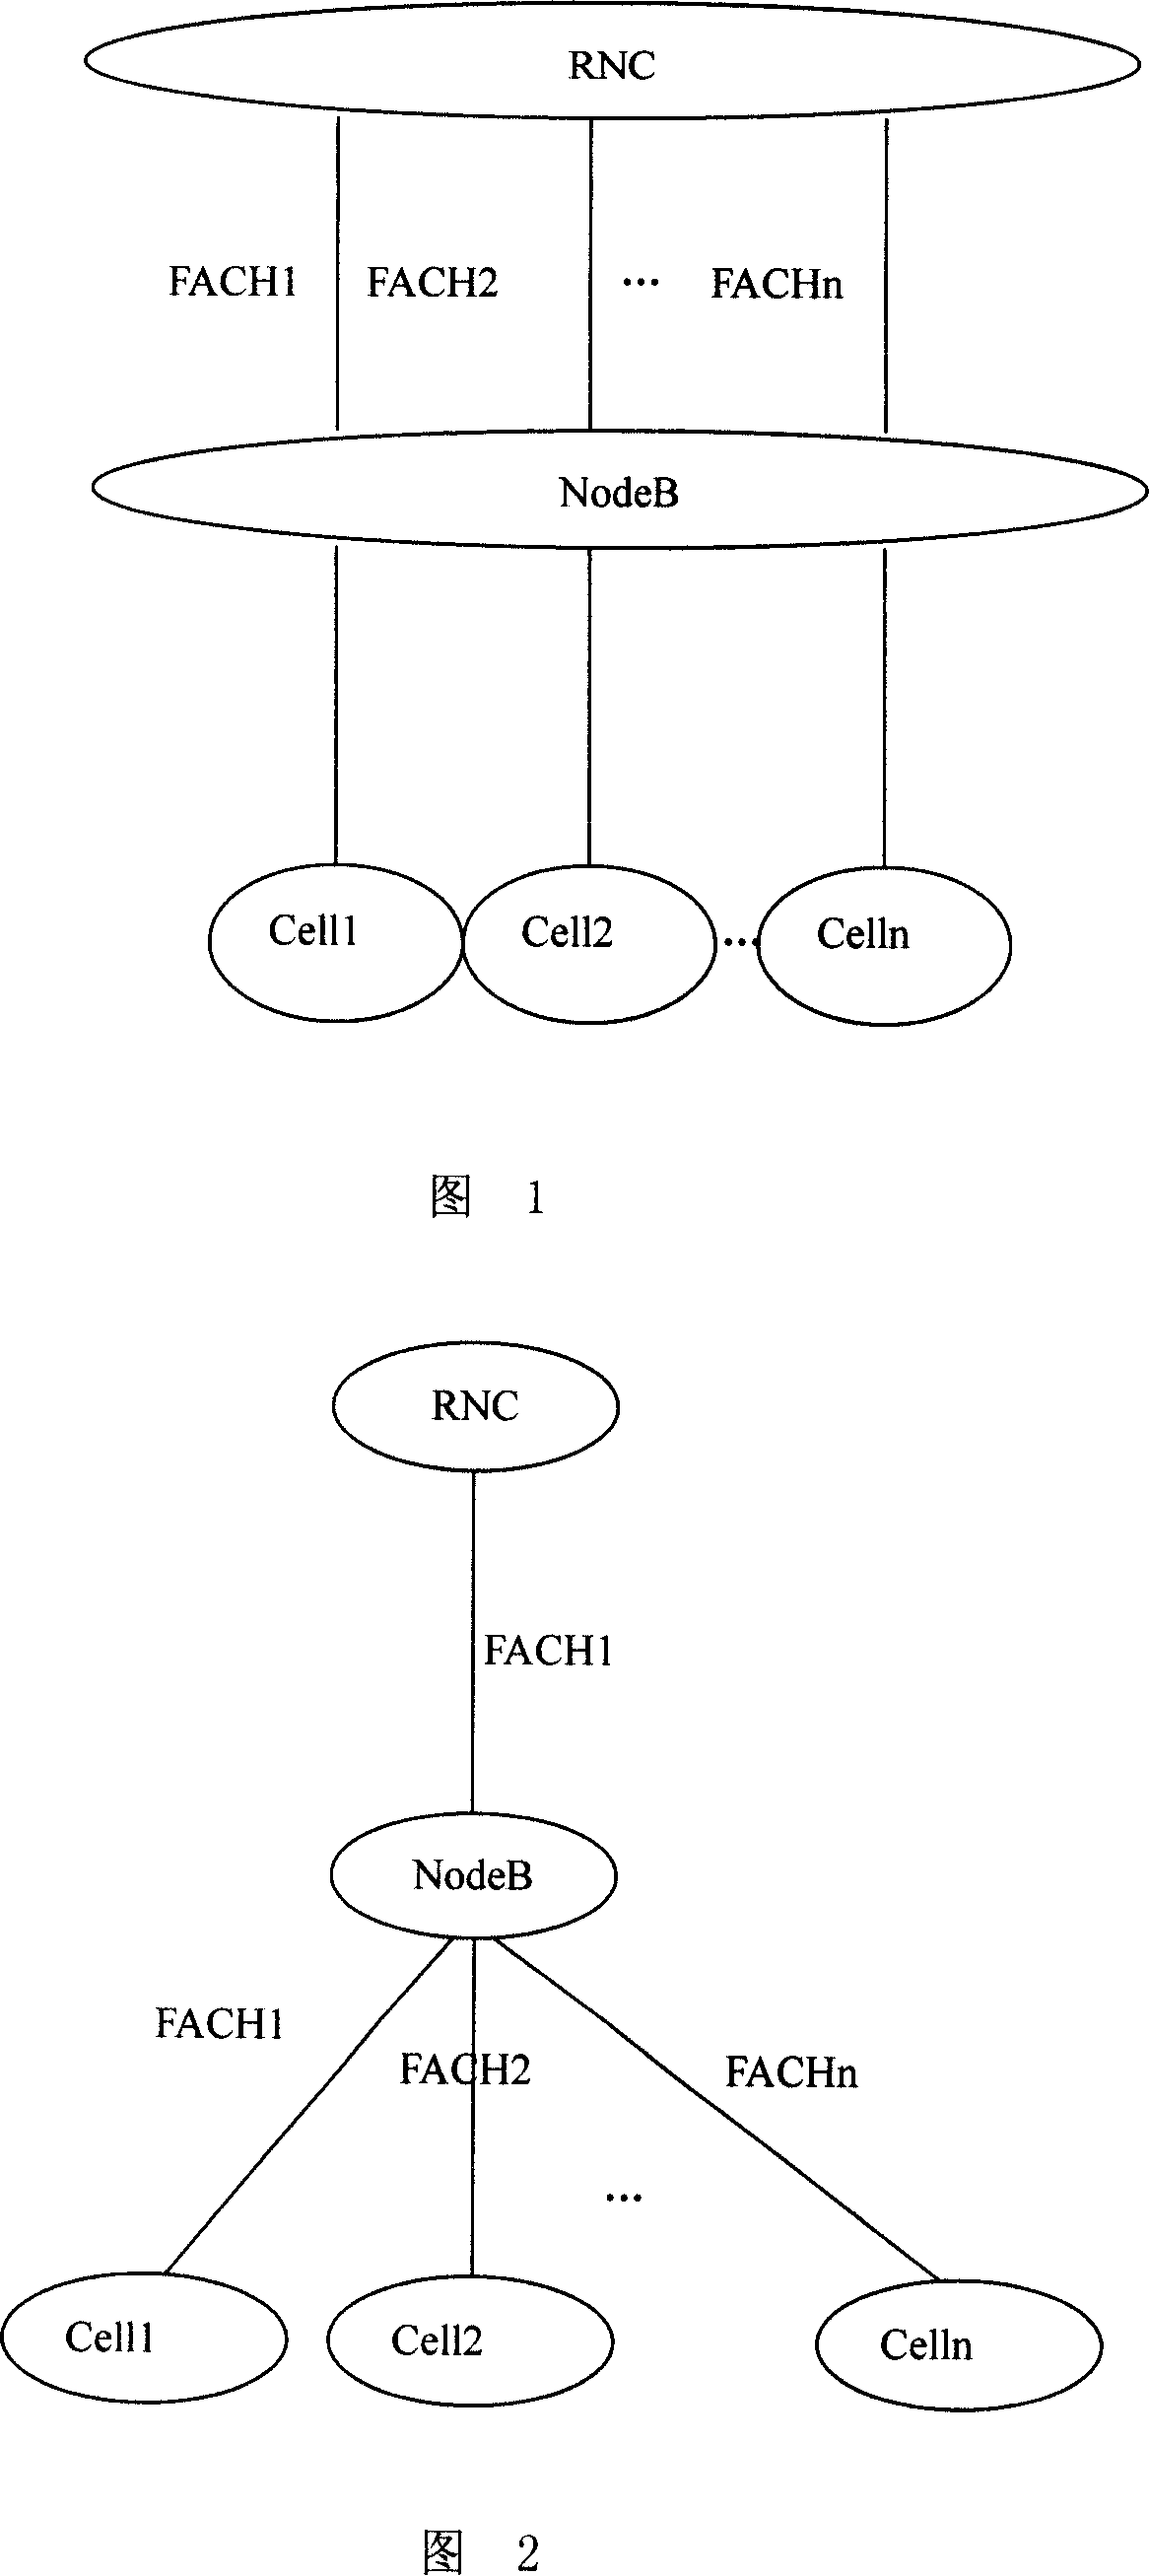 An implementation method of Iub bandwidth multiplexing